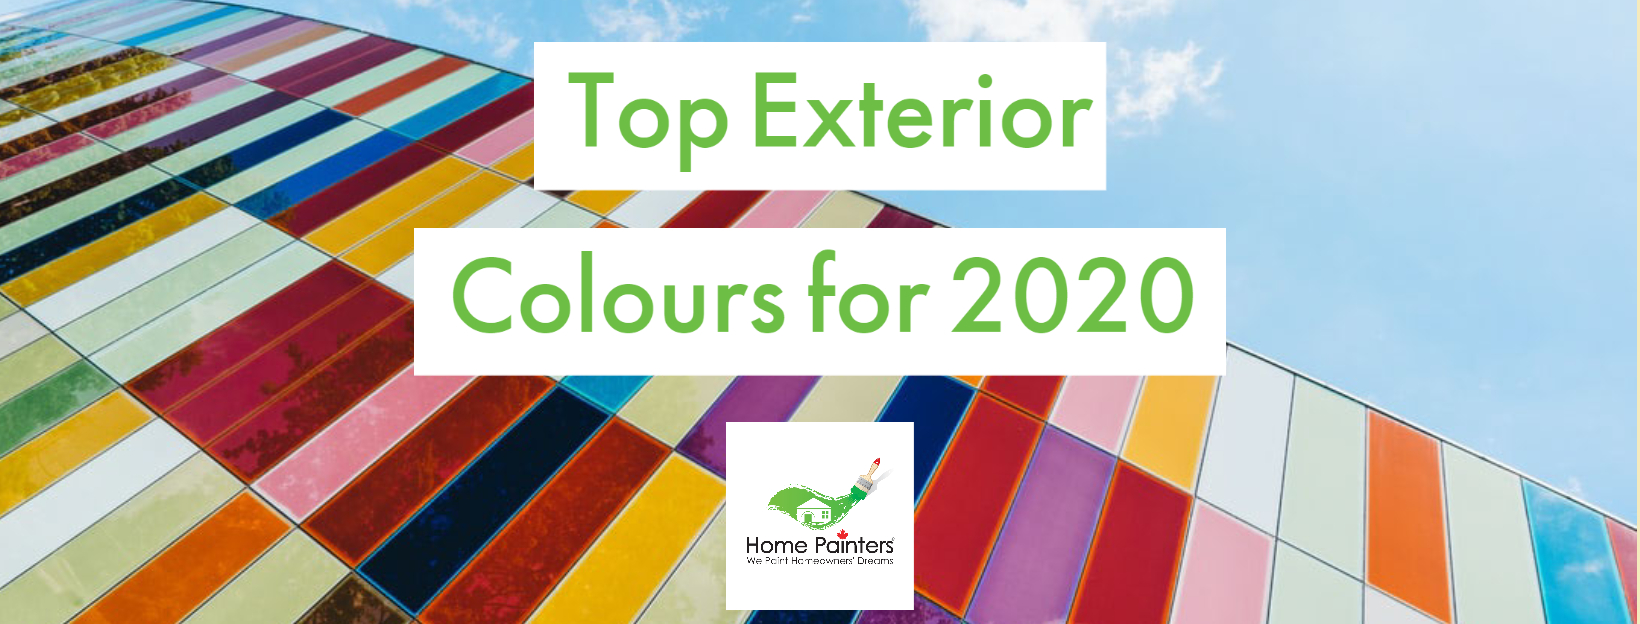 Top Exterior Paint Colours for 2020